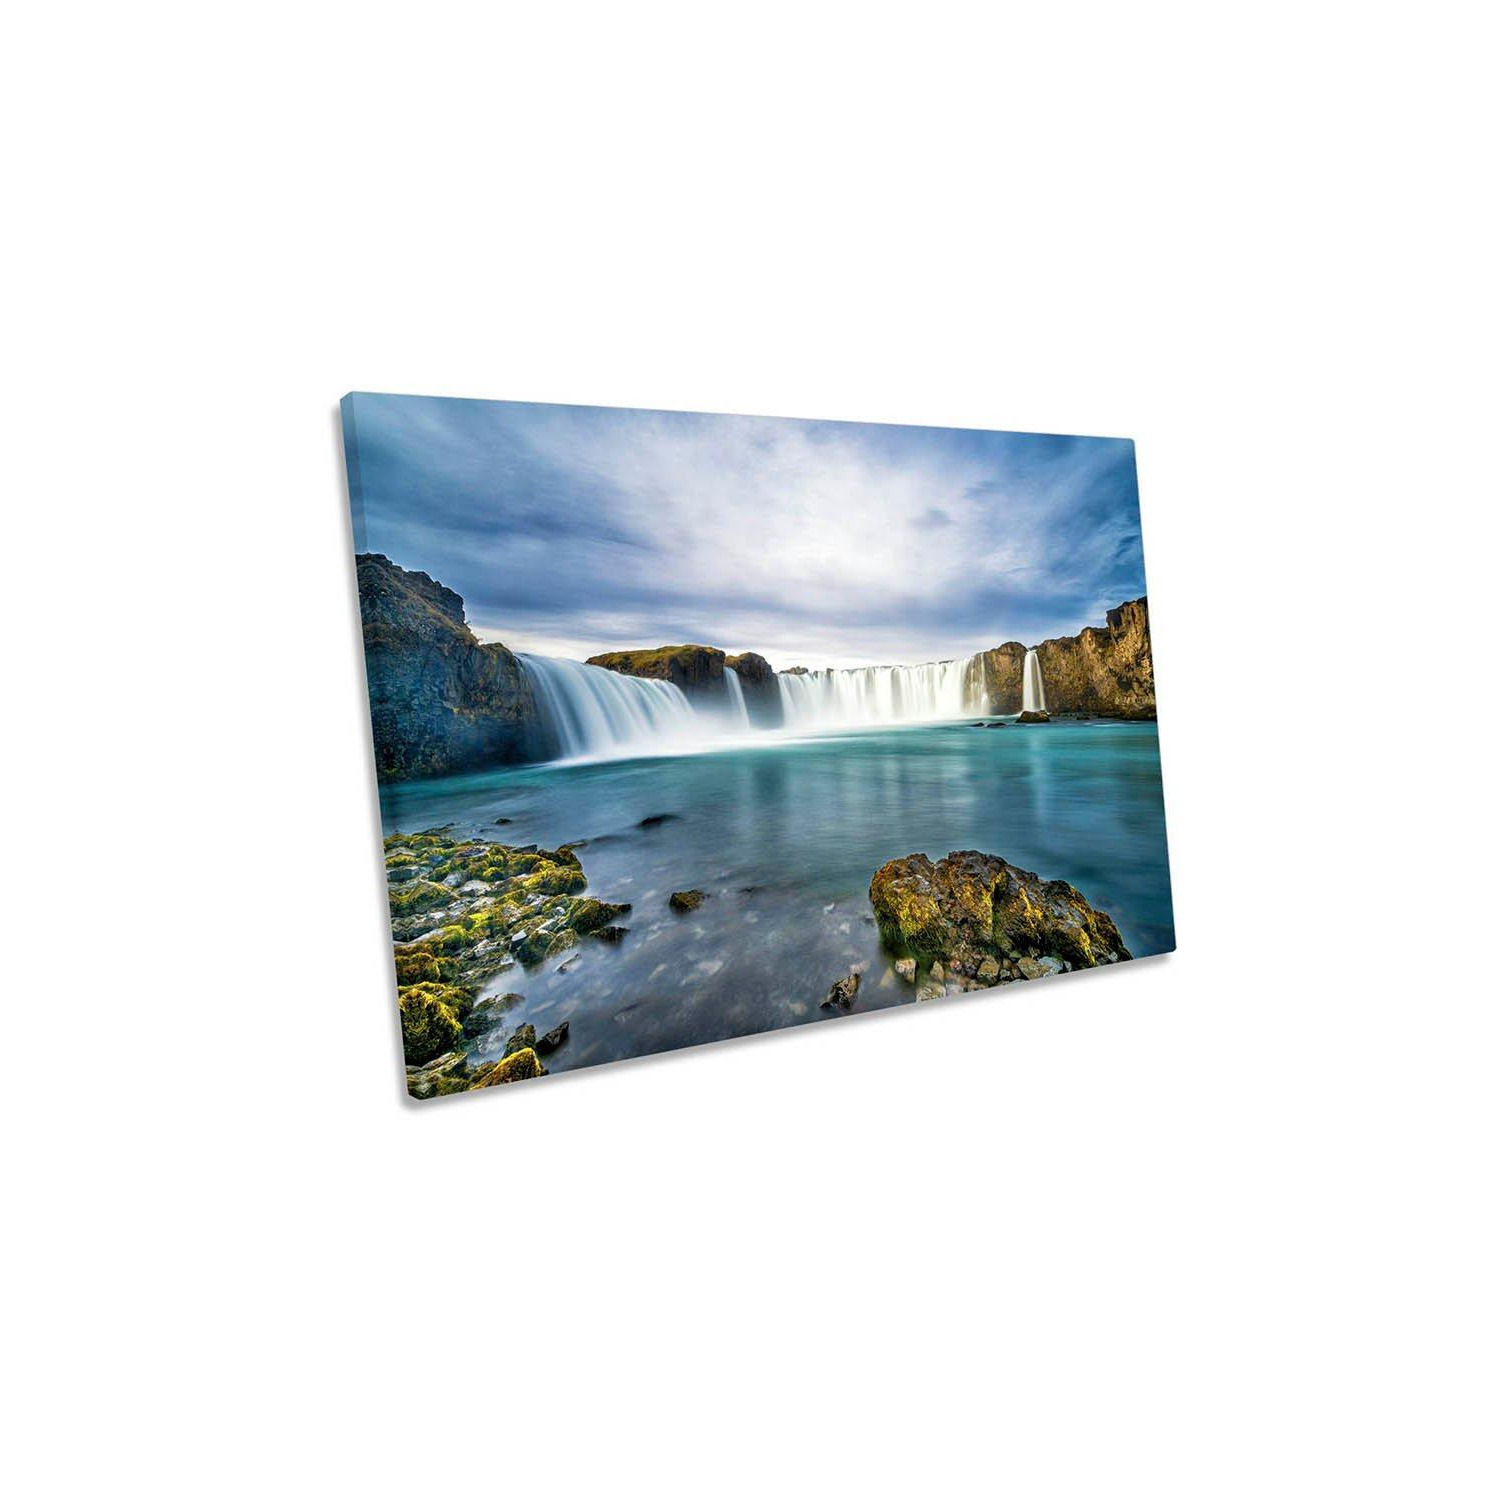 Godafoss Waterfall Nature Landscape Canvas Wall Art Picture Print - image 1